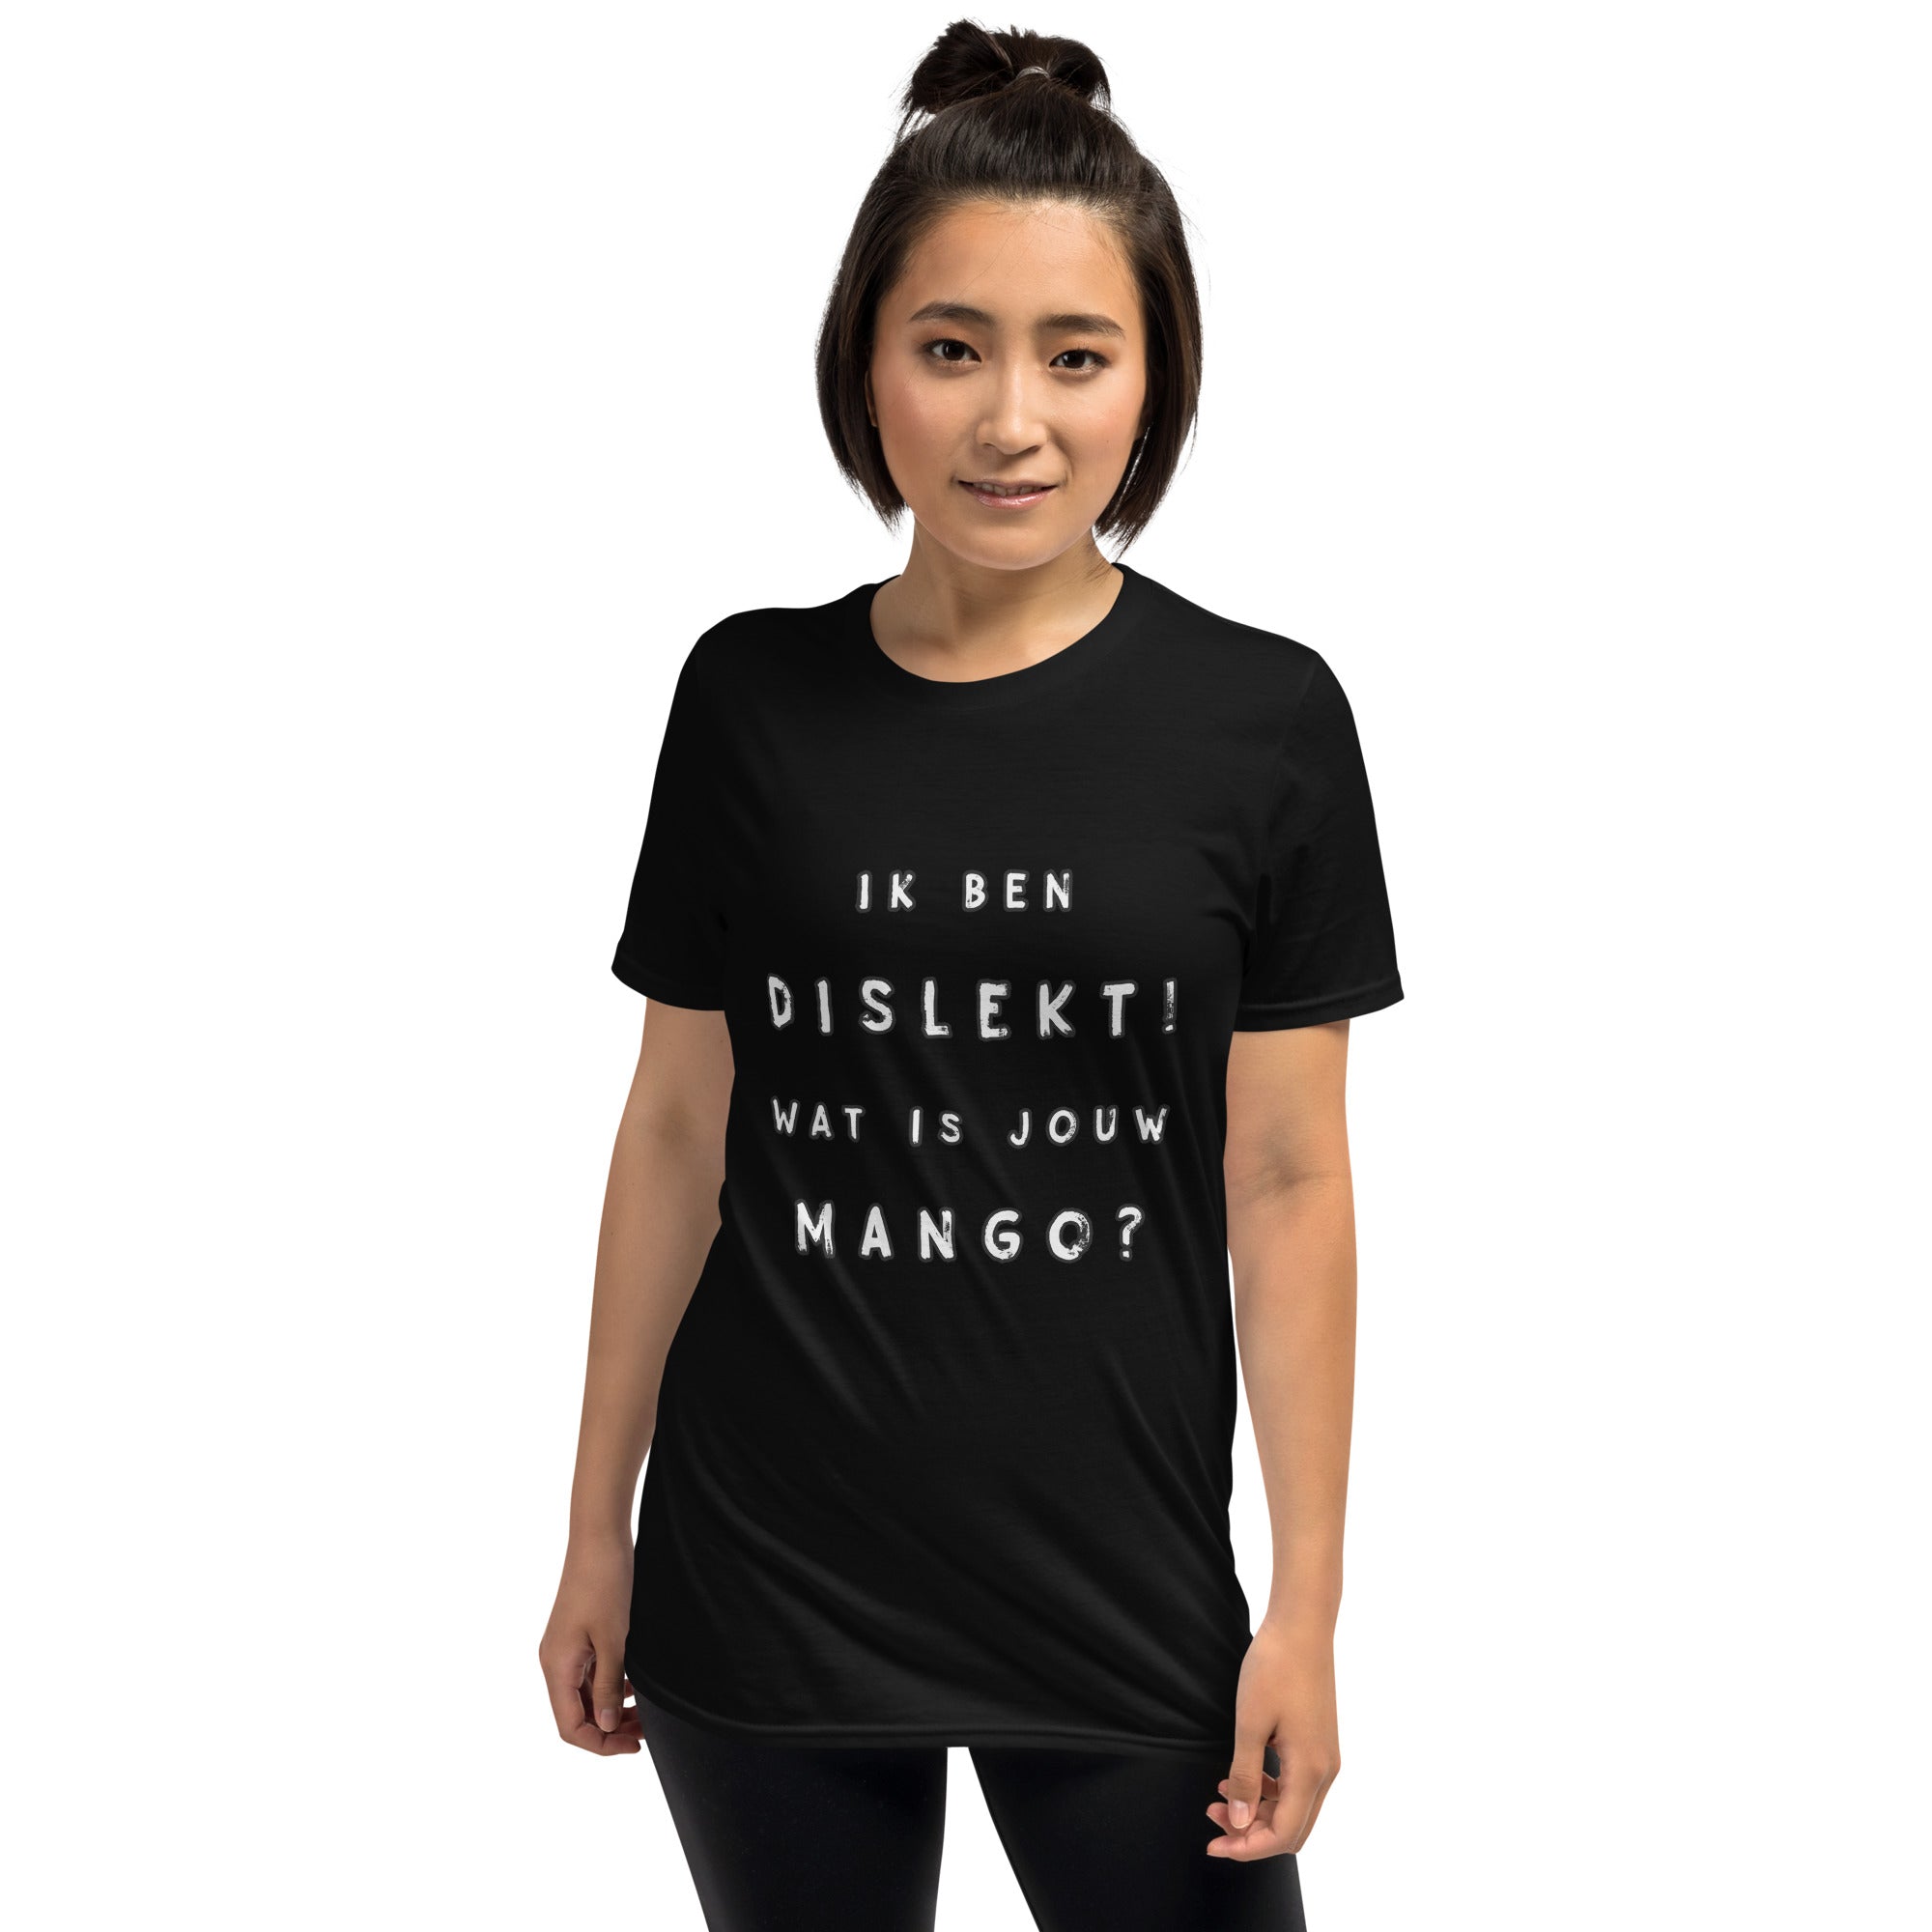 T-shirt "Ik ben Dislekt, wat is jouw mango"